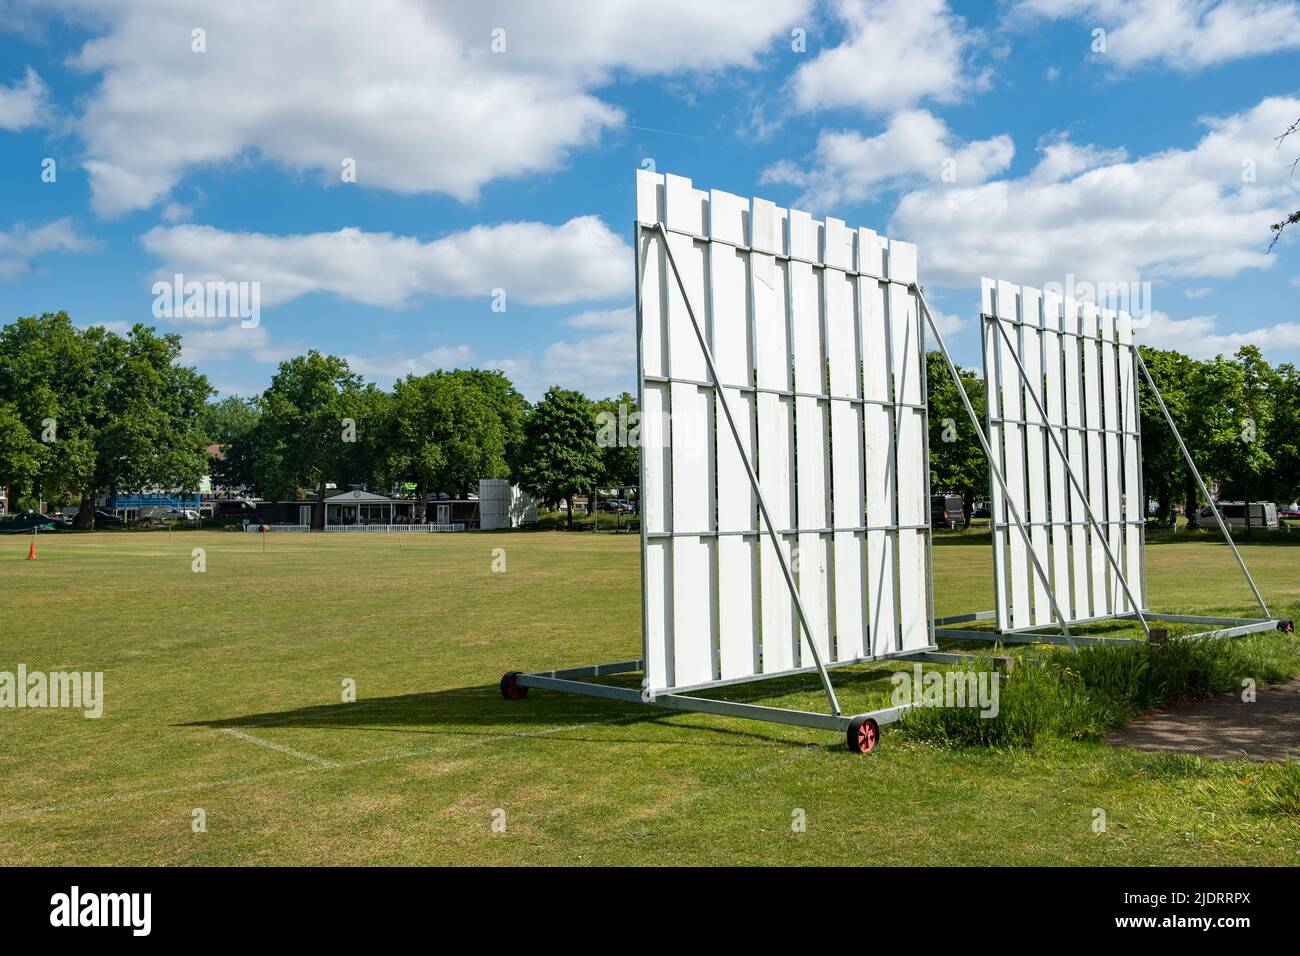 Cricket-Schaubildschirme auf dem leeren Cricket-Spielfeld in Kew, West-London Stockfoto